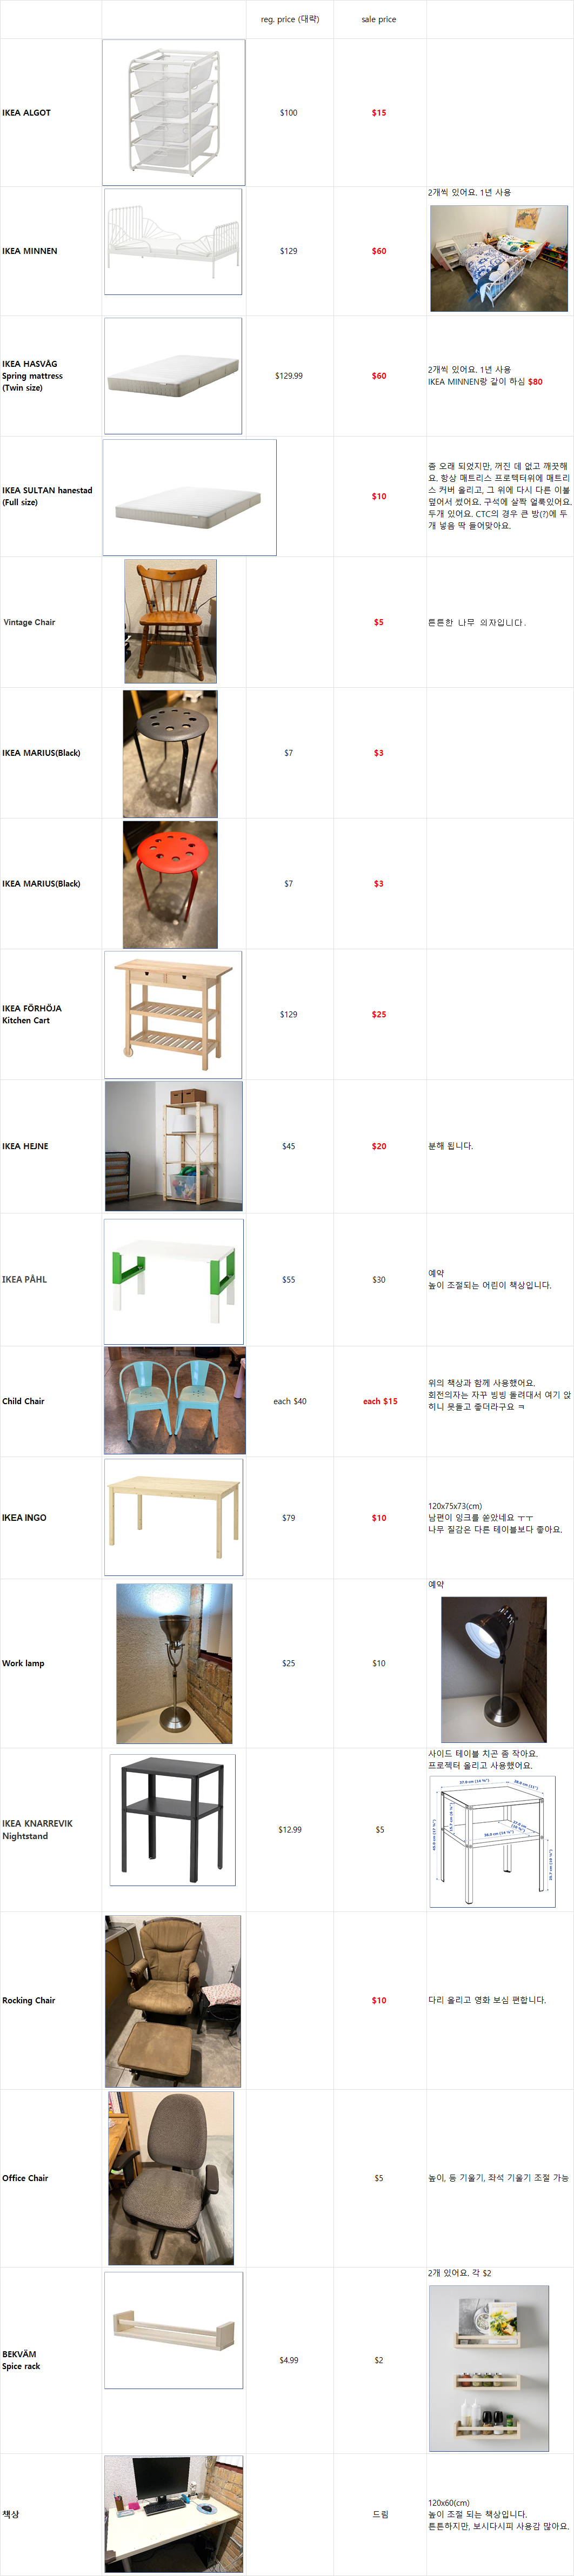 moving sale_furniture4.jpg